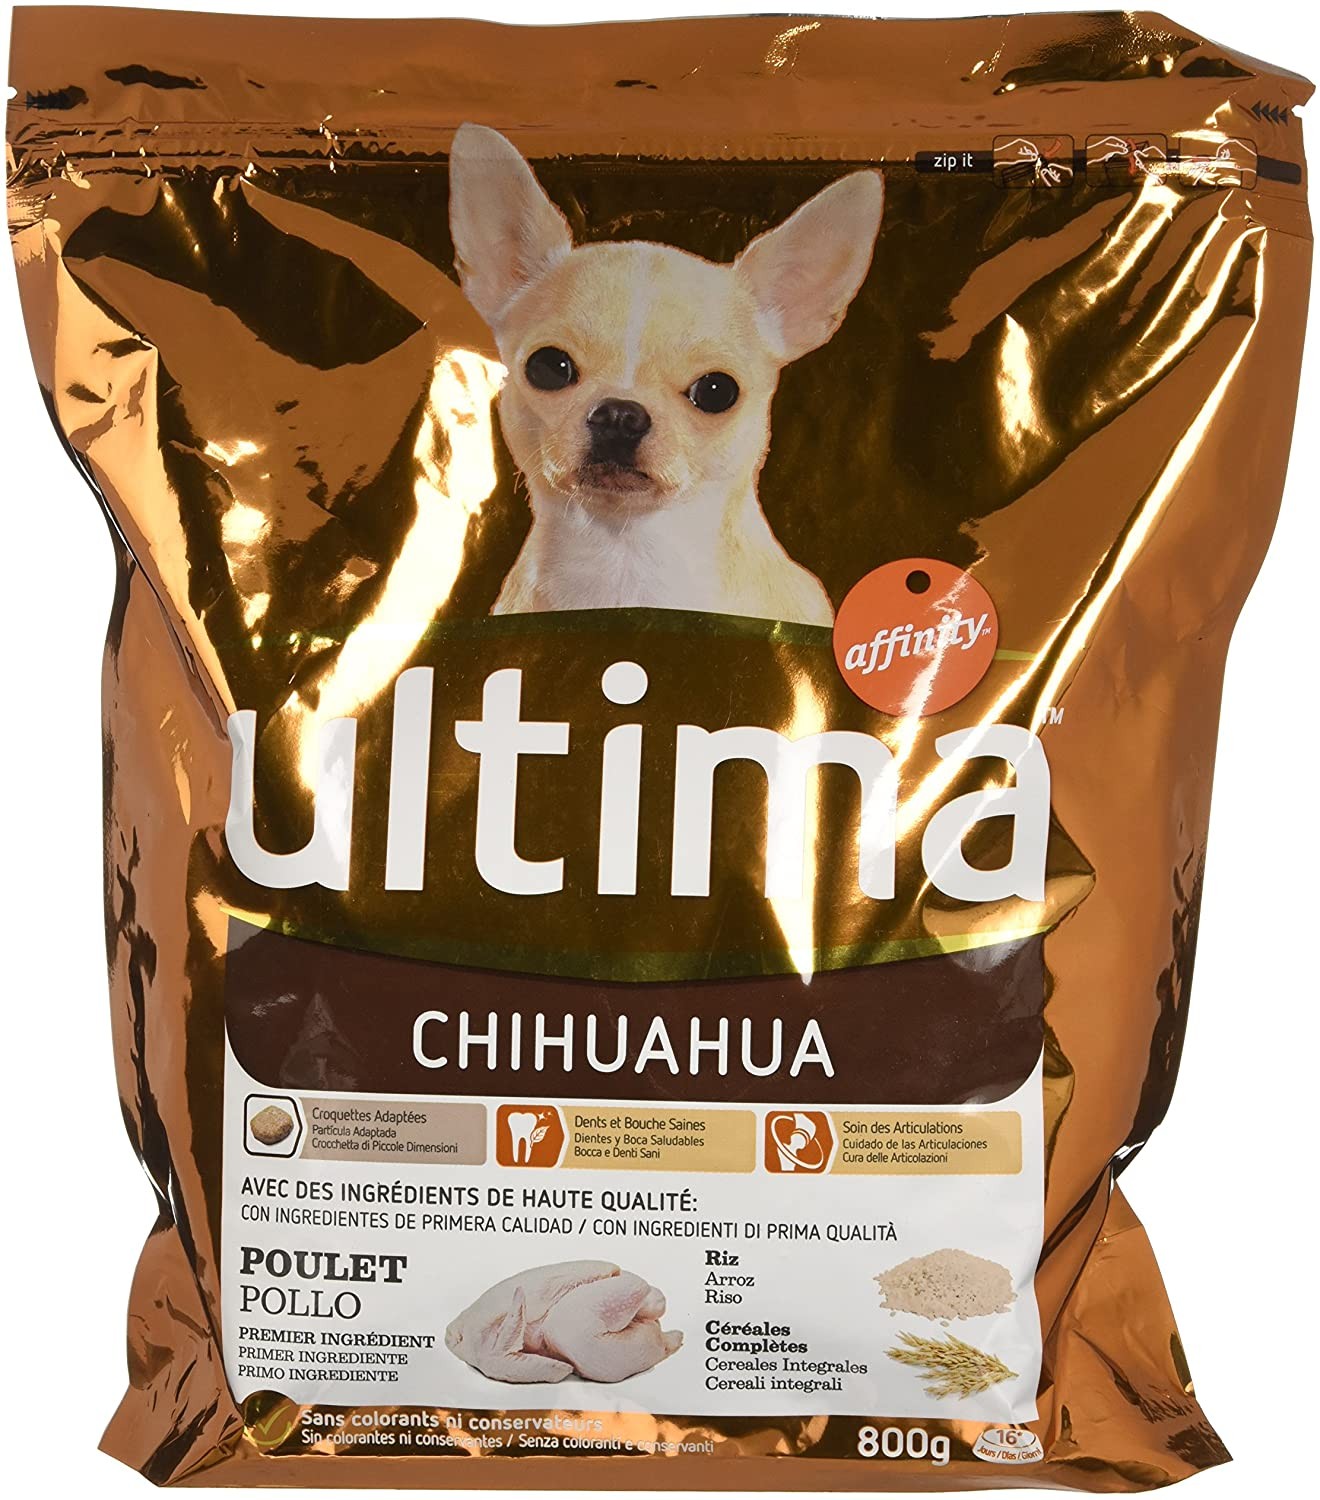 Ultima Alimento per Cani Chihuahua, 800g – Raspada